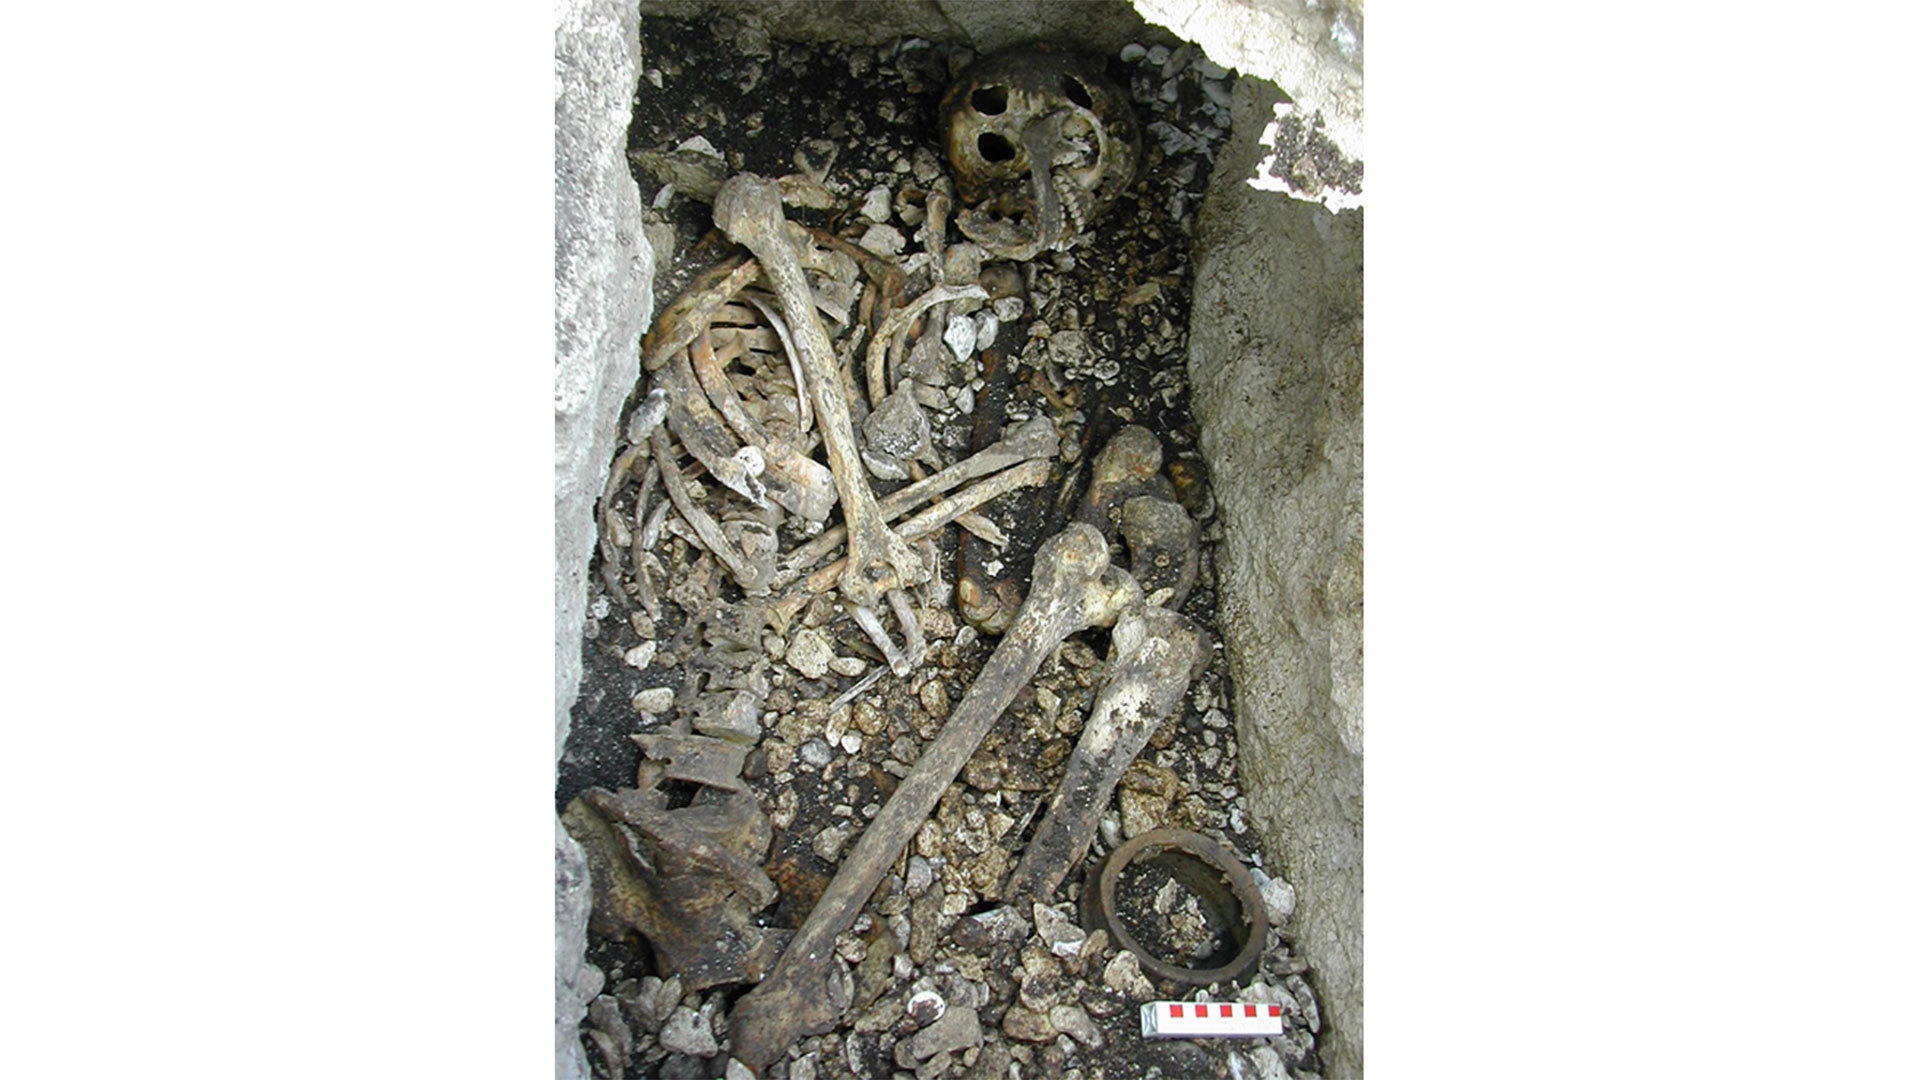 Haemochromatosis---burial-site---Lancet.jpg